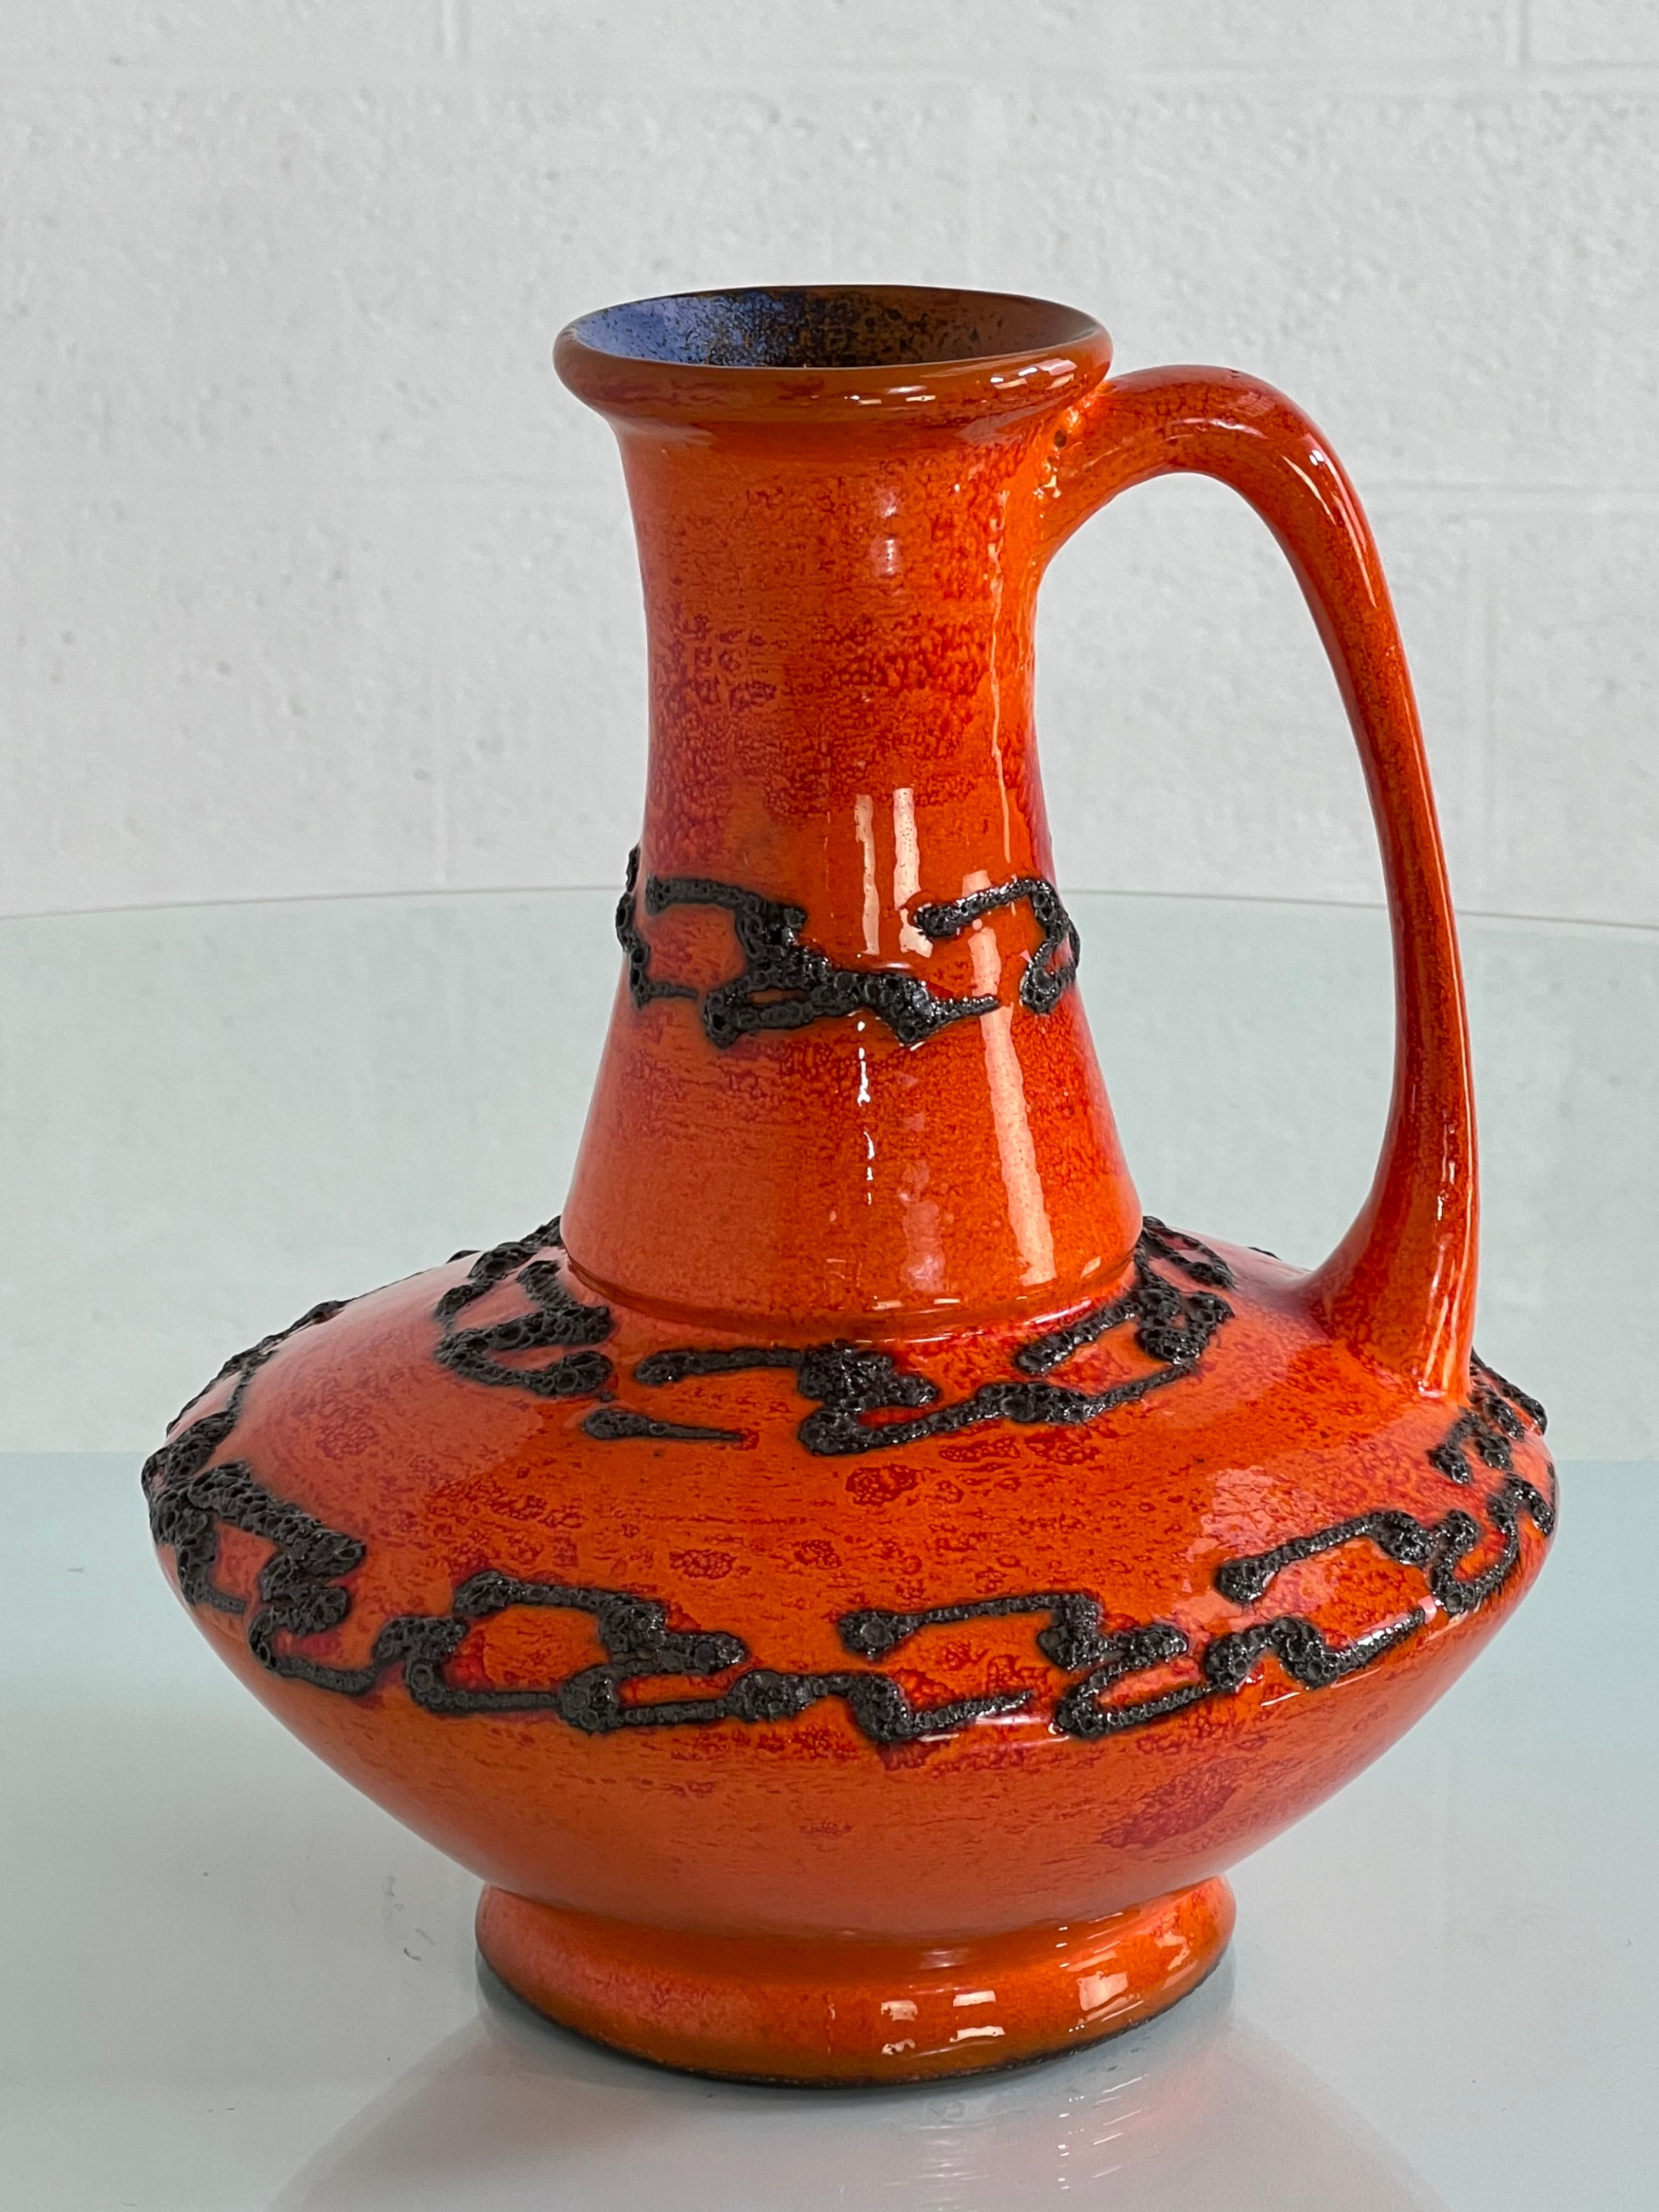 1960s West Germany Handmade Ceramic Pitcher Vase in amazing orange and black color 